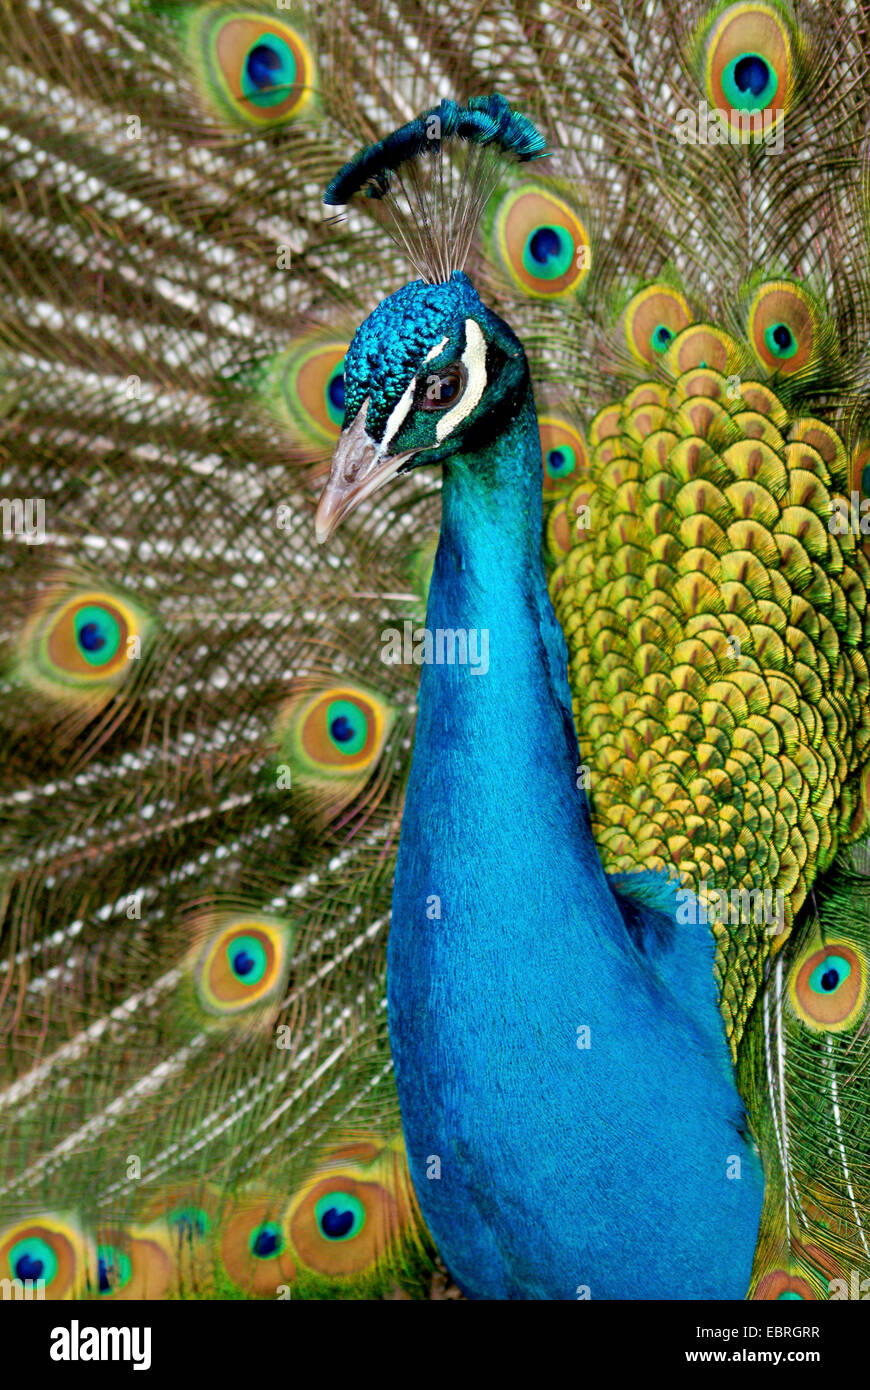 Común, Indian peafowl peafowl, blue peafowl (Pavo cristatus), retrato de un grifo de visualización Foto de stock